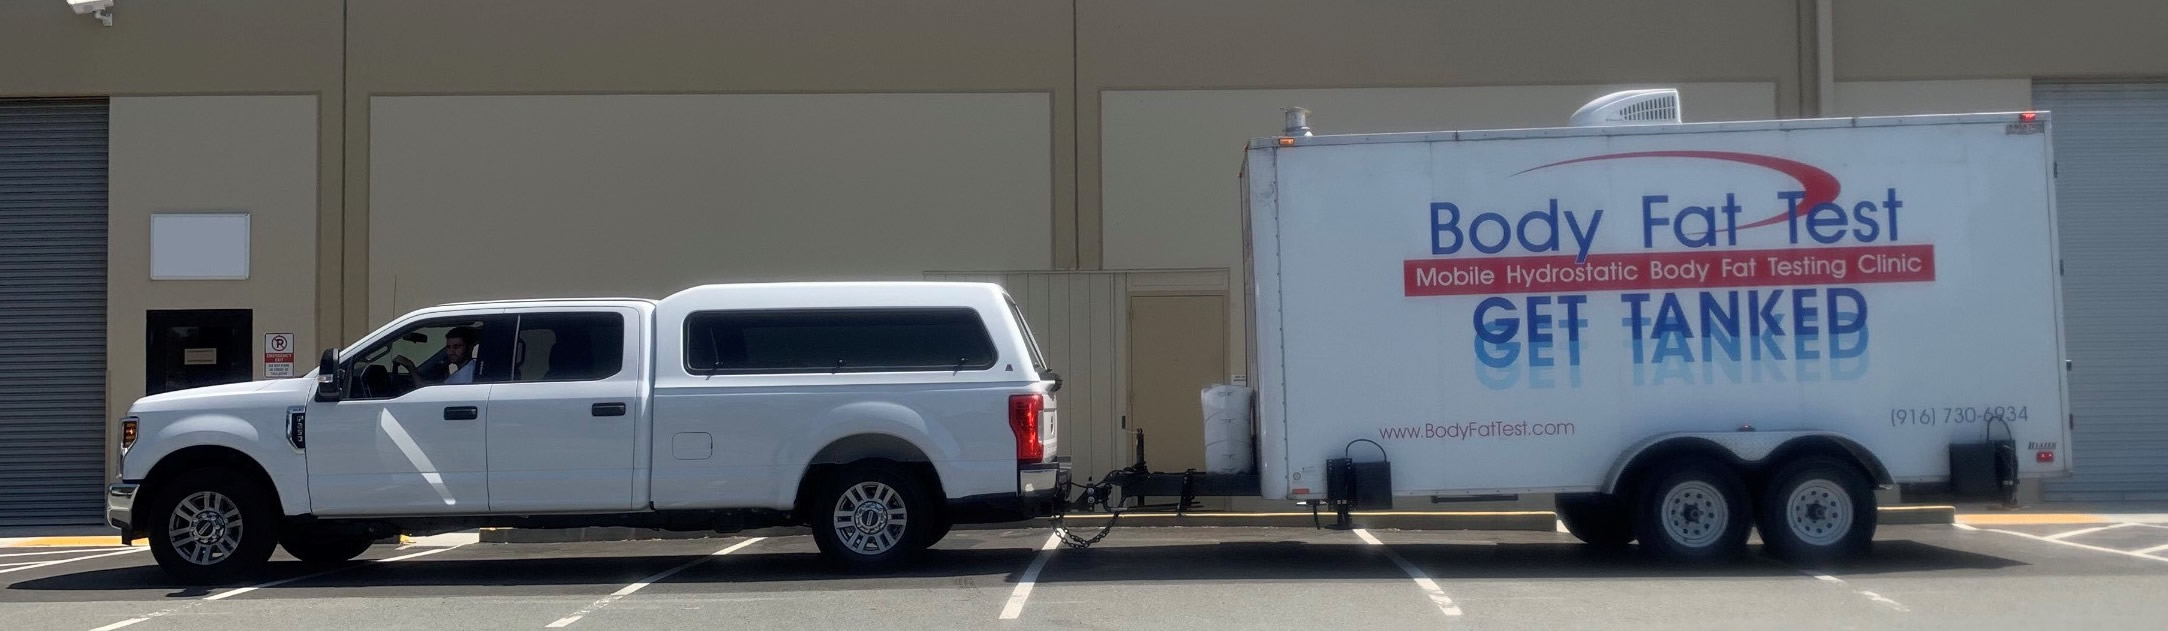 Northern California Body Fat Test Truck